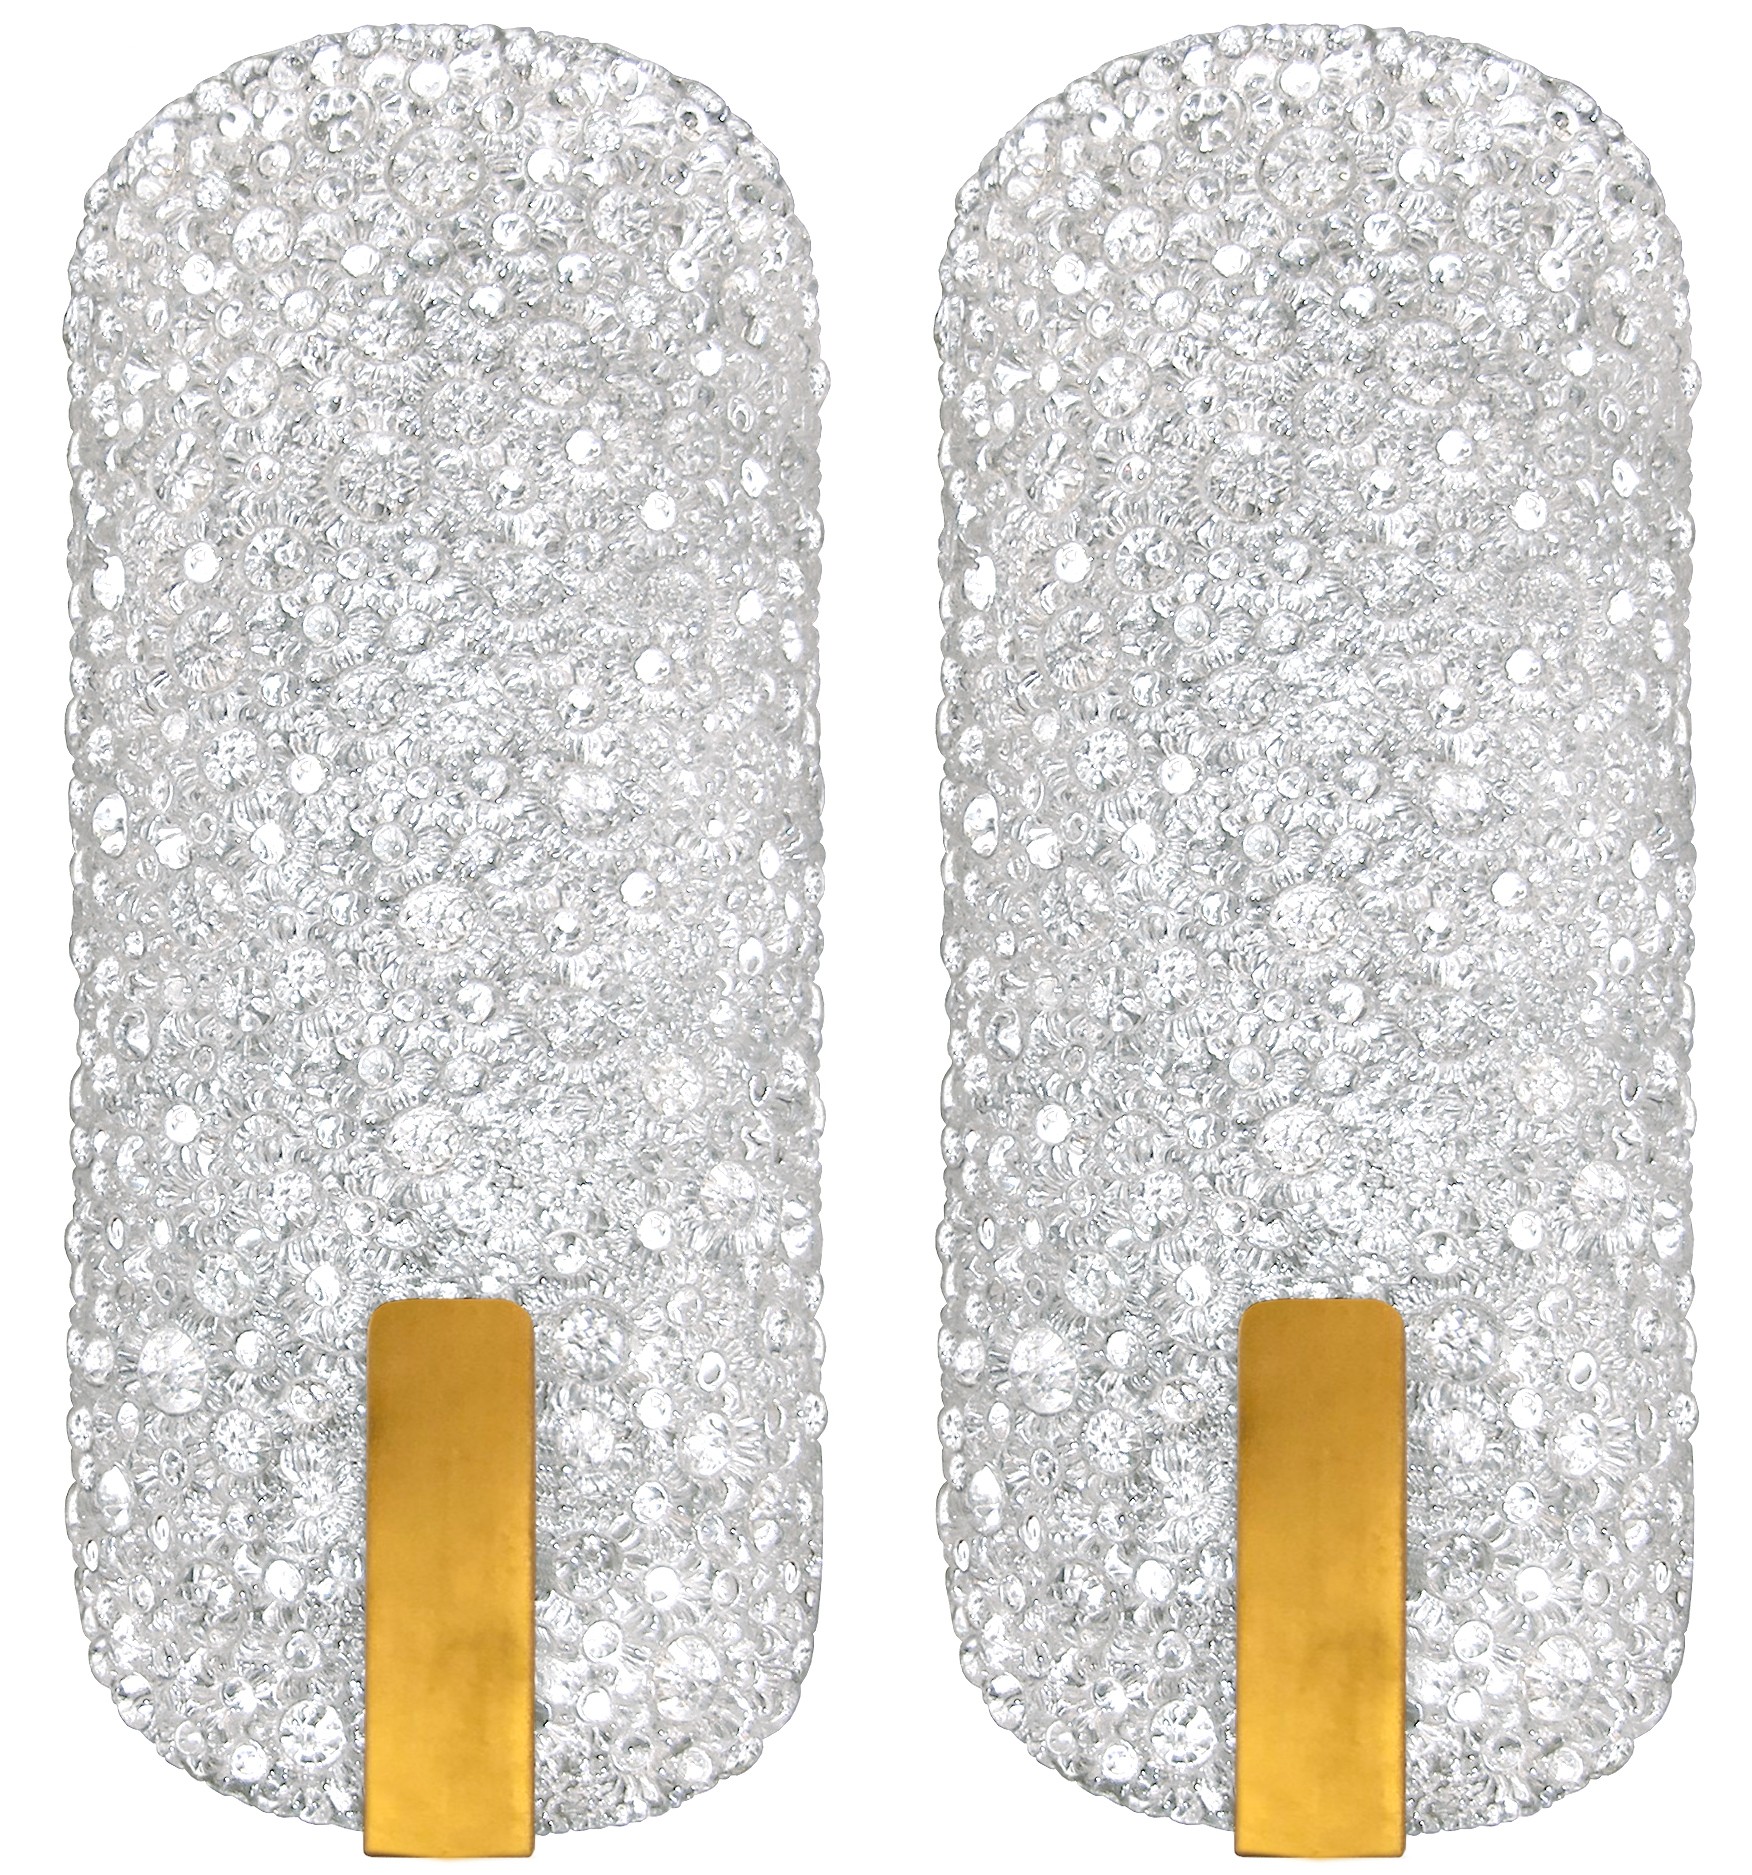 Pair of Venini Textured Glass Sconces